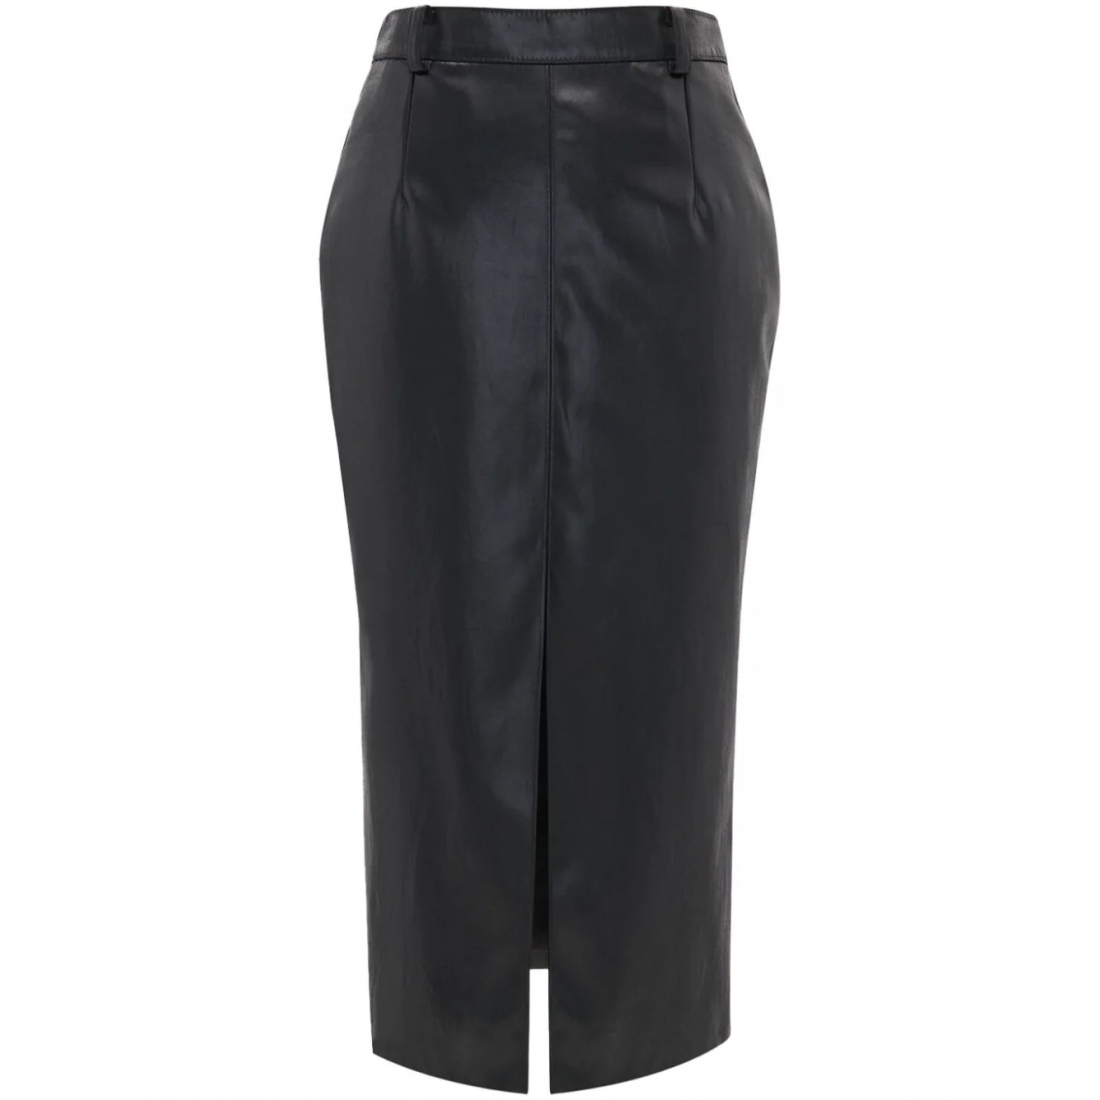 Women's 'Pencil' Midi Skirt